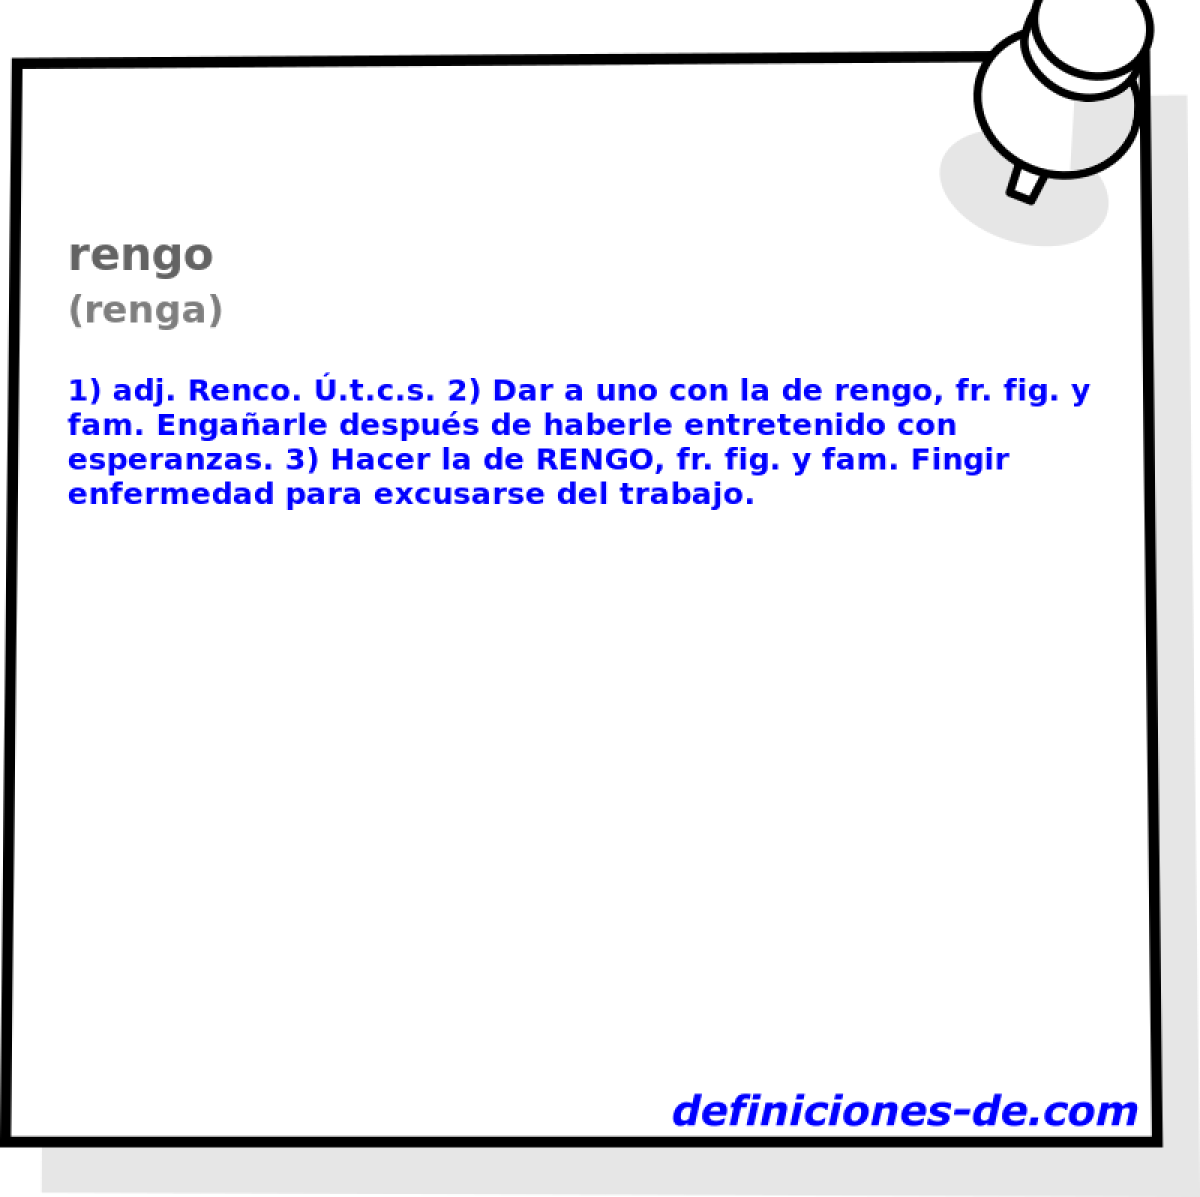 rengo (renga)